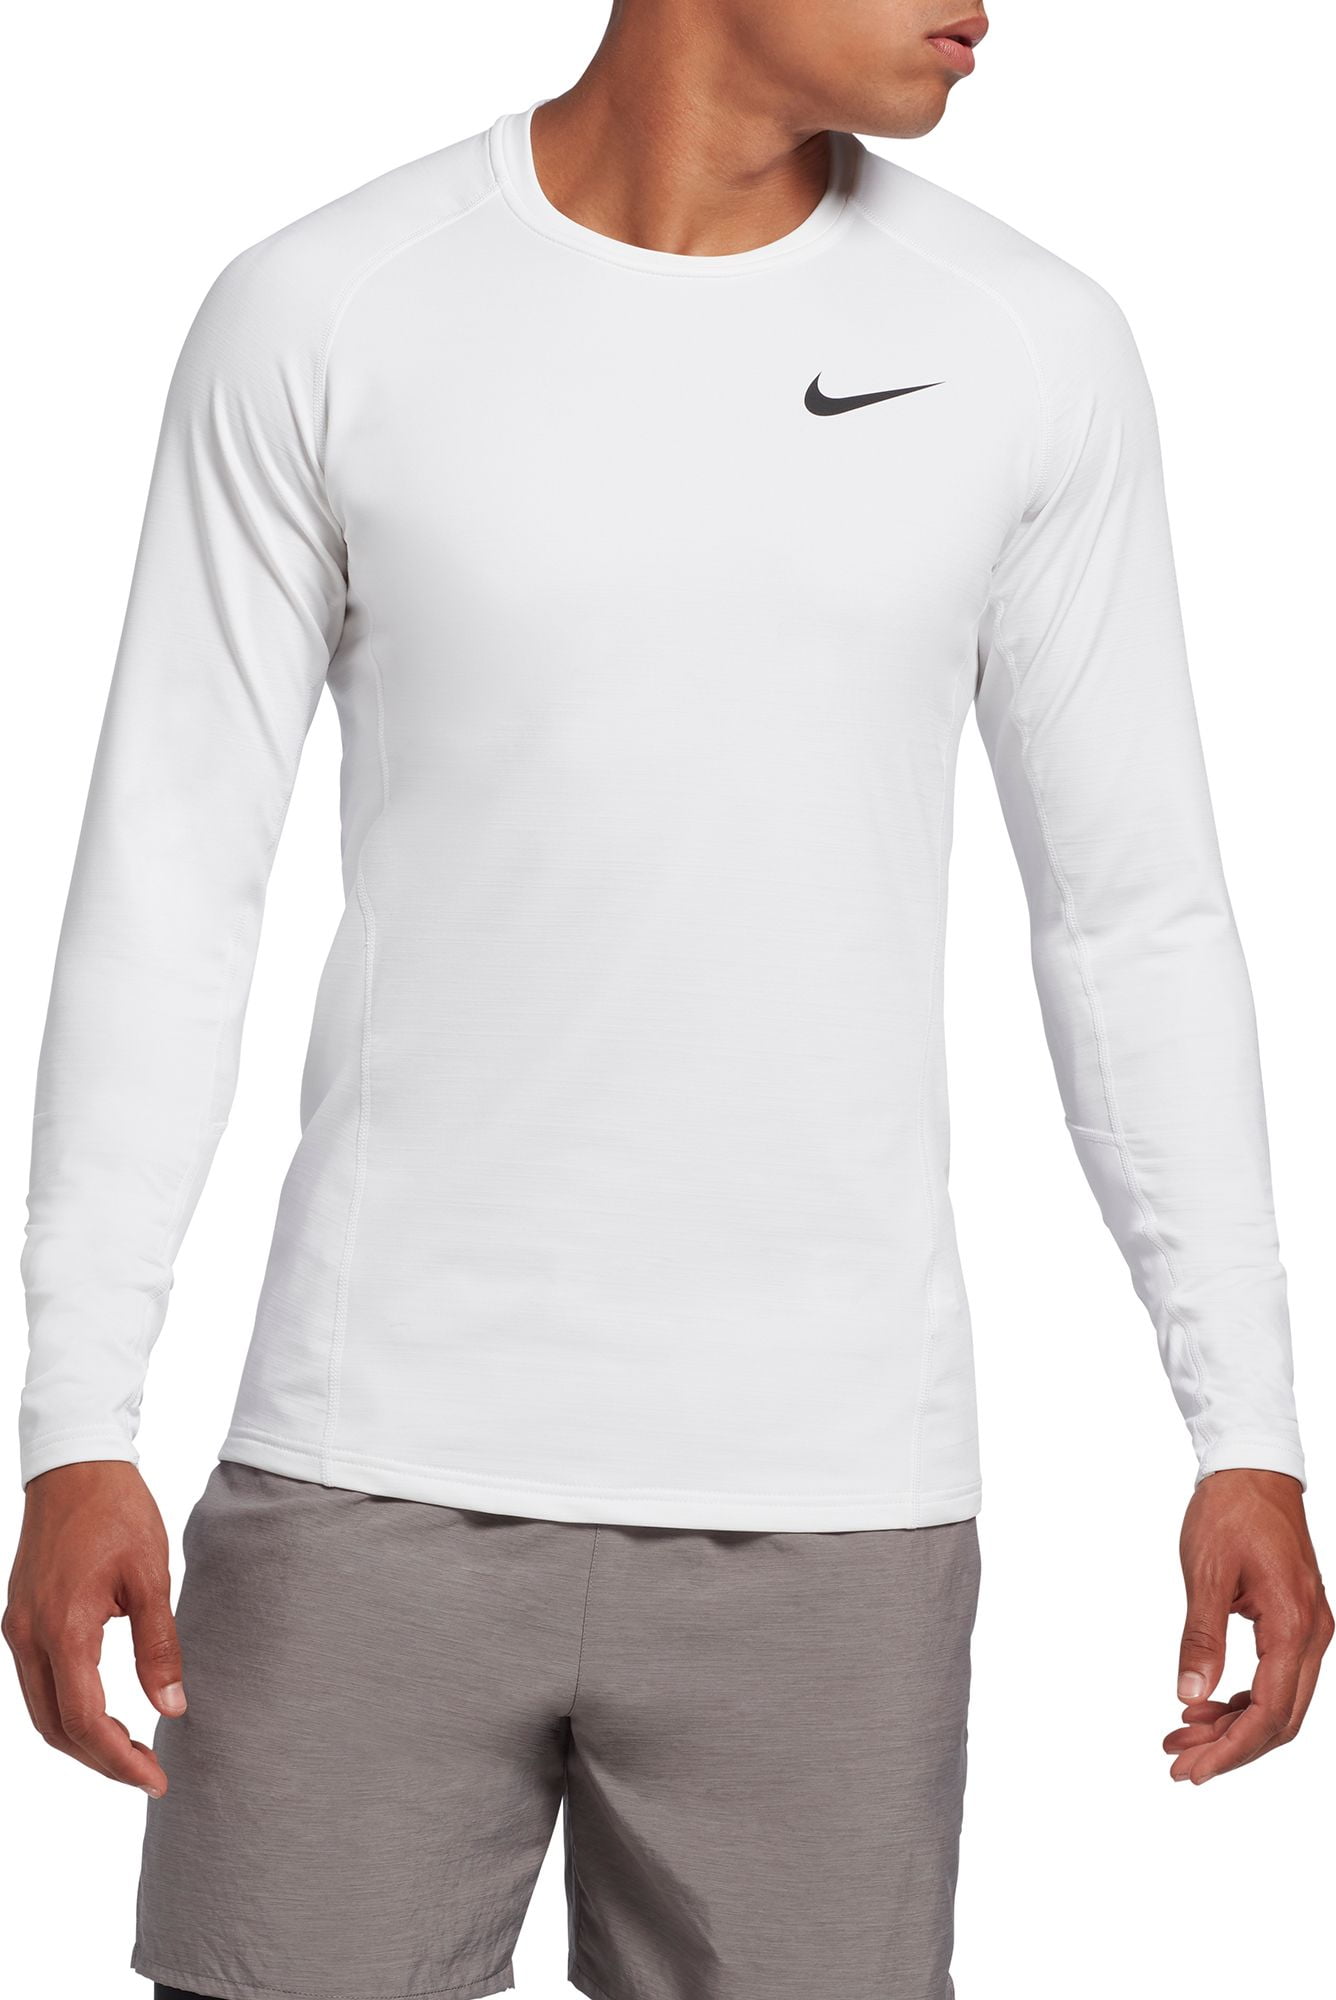 Nike Men's Pro Therma Dri-FIT Long Sleeve Shirt - Walmart.com